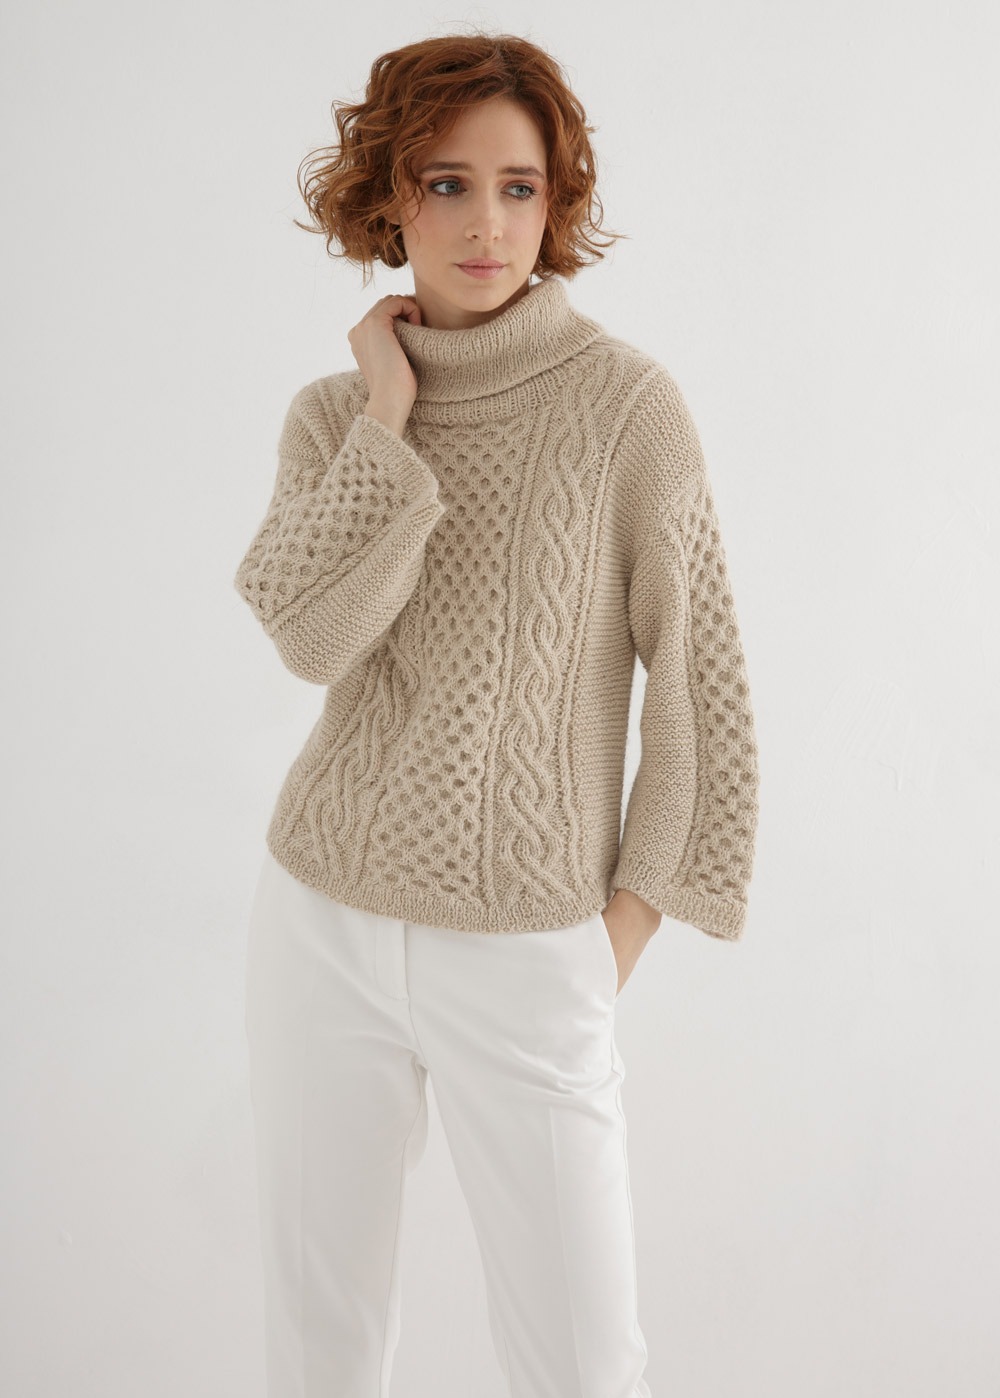 Cable Sweater Knit Pattern Renaissance